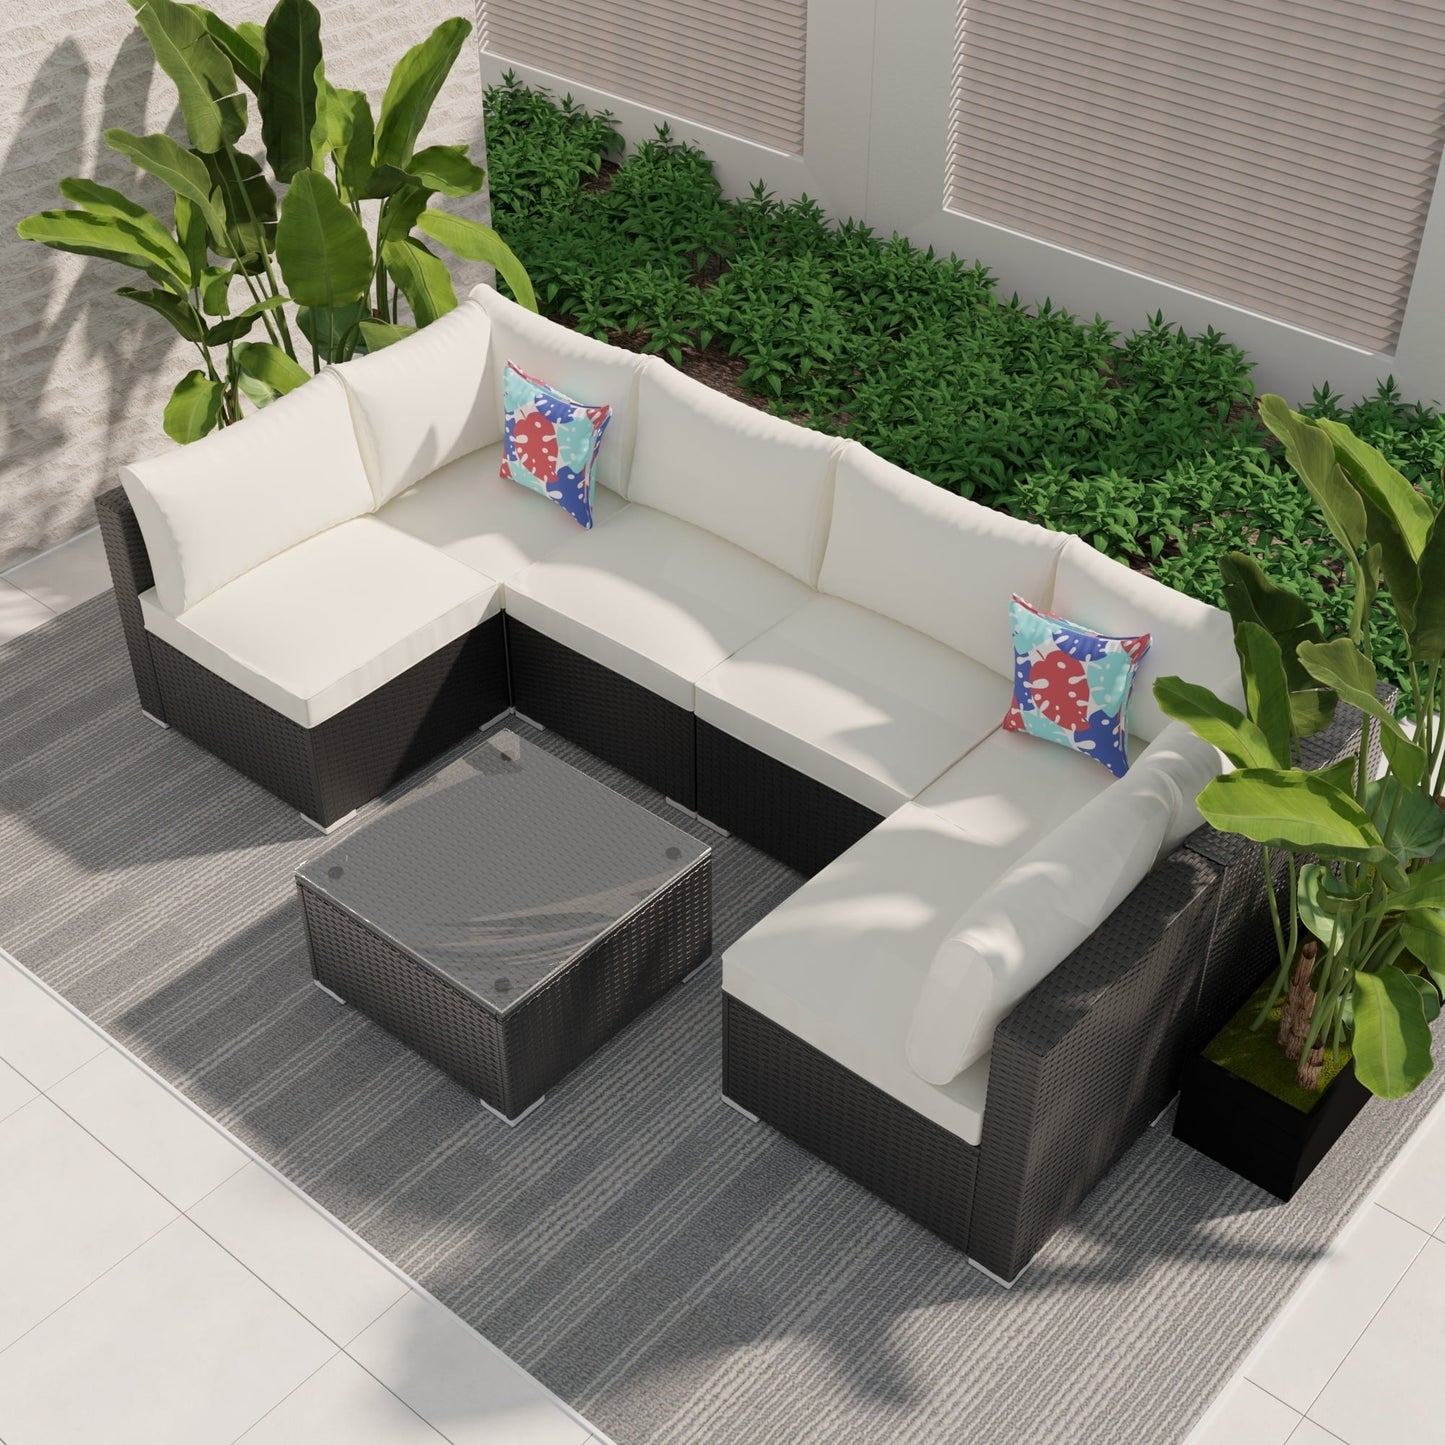 Ainfox 7 Pcs Outdoor Patio Furniture Sofa Set on Sale. Beige